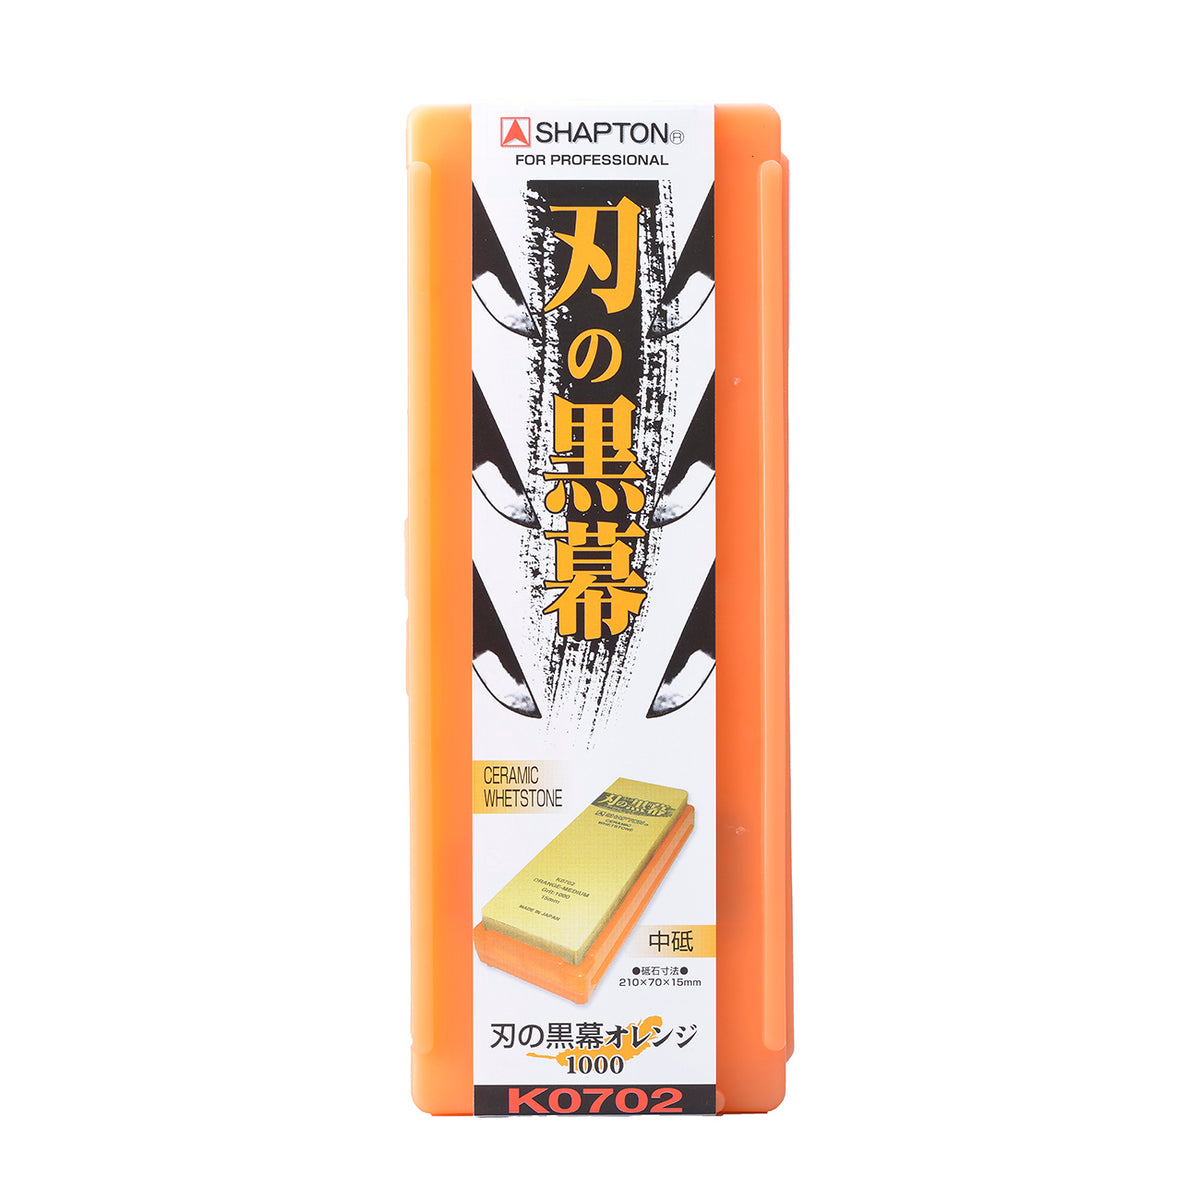 SHAPTON KUROMAKU ORANGE #1000 / シャプトン 刃の黒幕 オレンジ #1000 